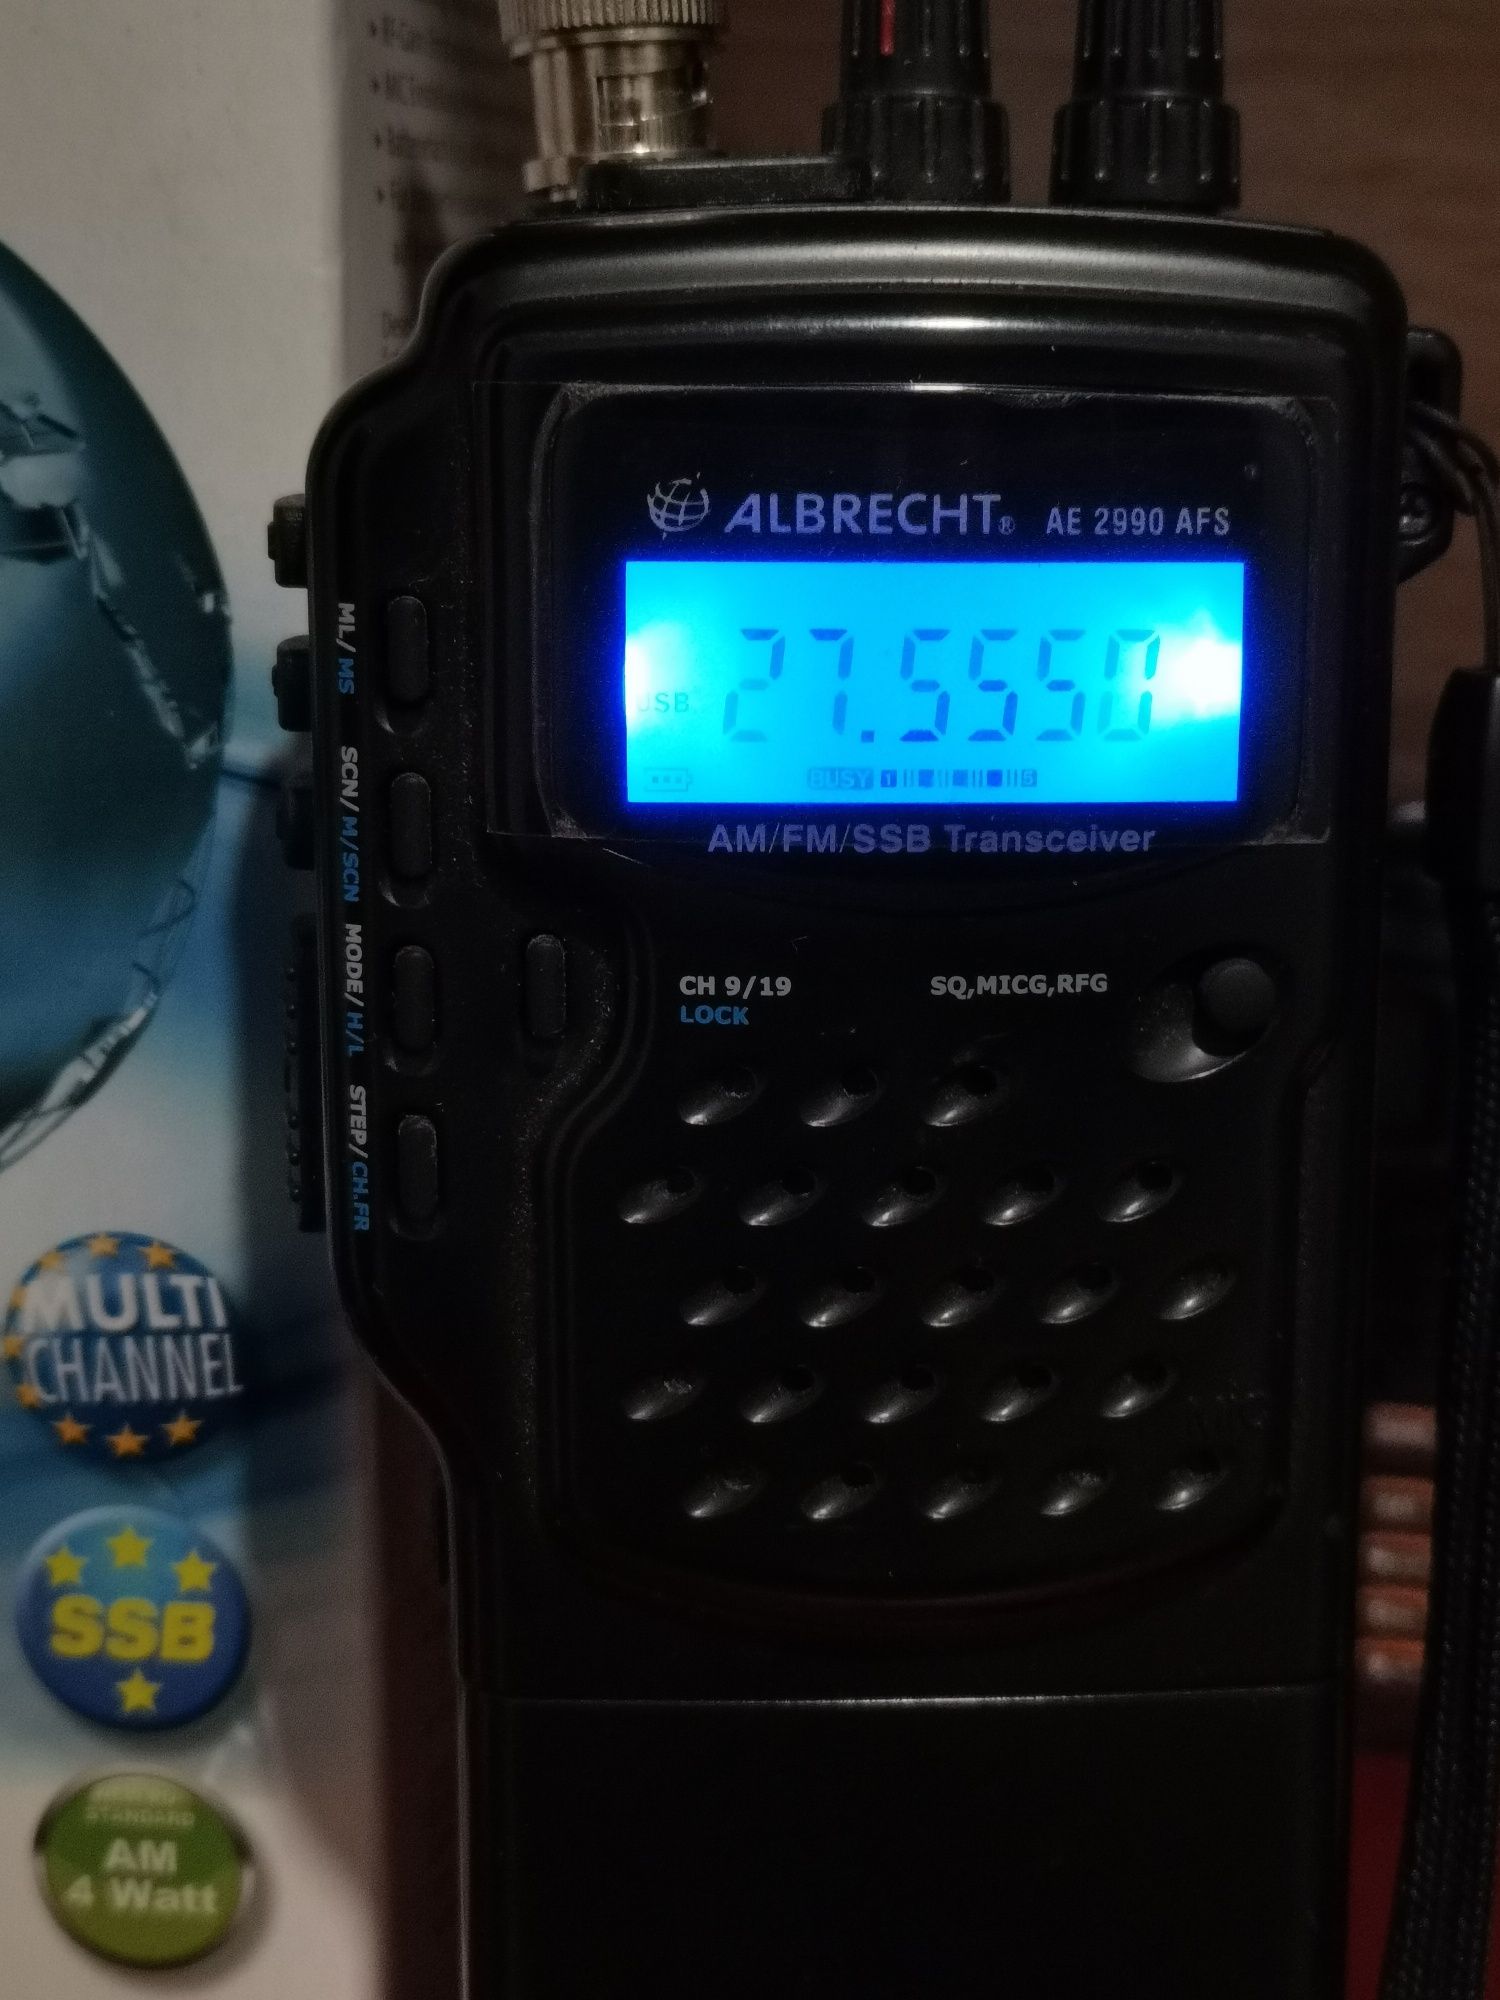 Statie emisie radio cb Albrecht 2990 Afs amplificatoare transceiver